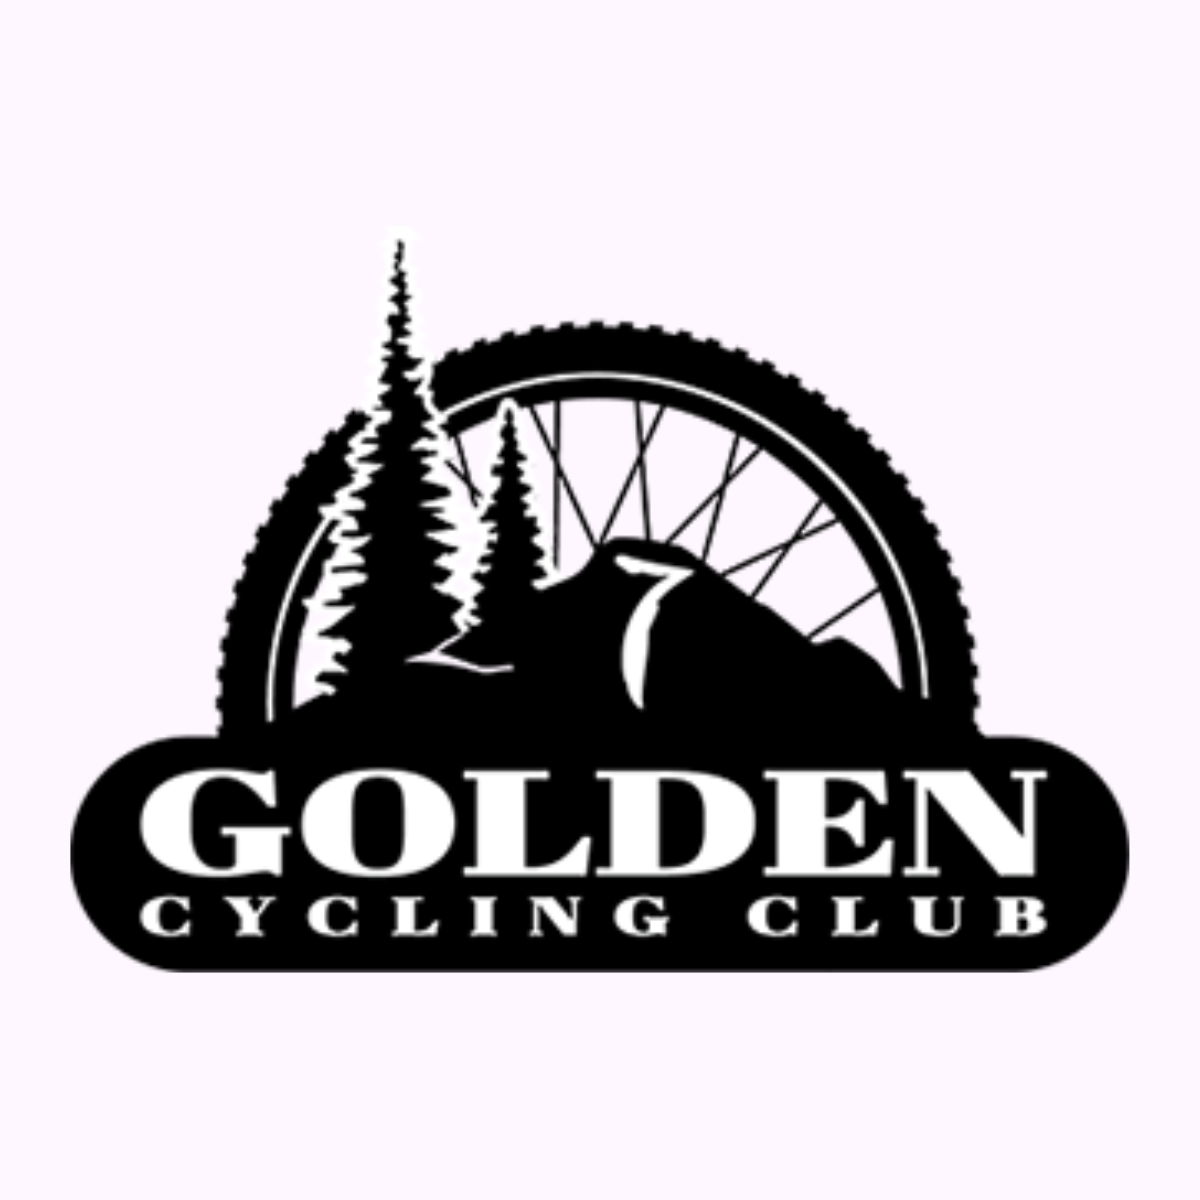 GOLDEN CYCLING CLUB